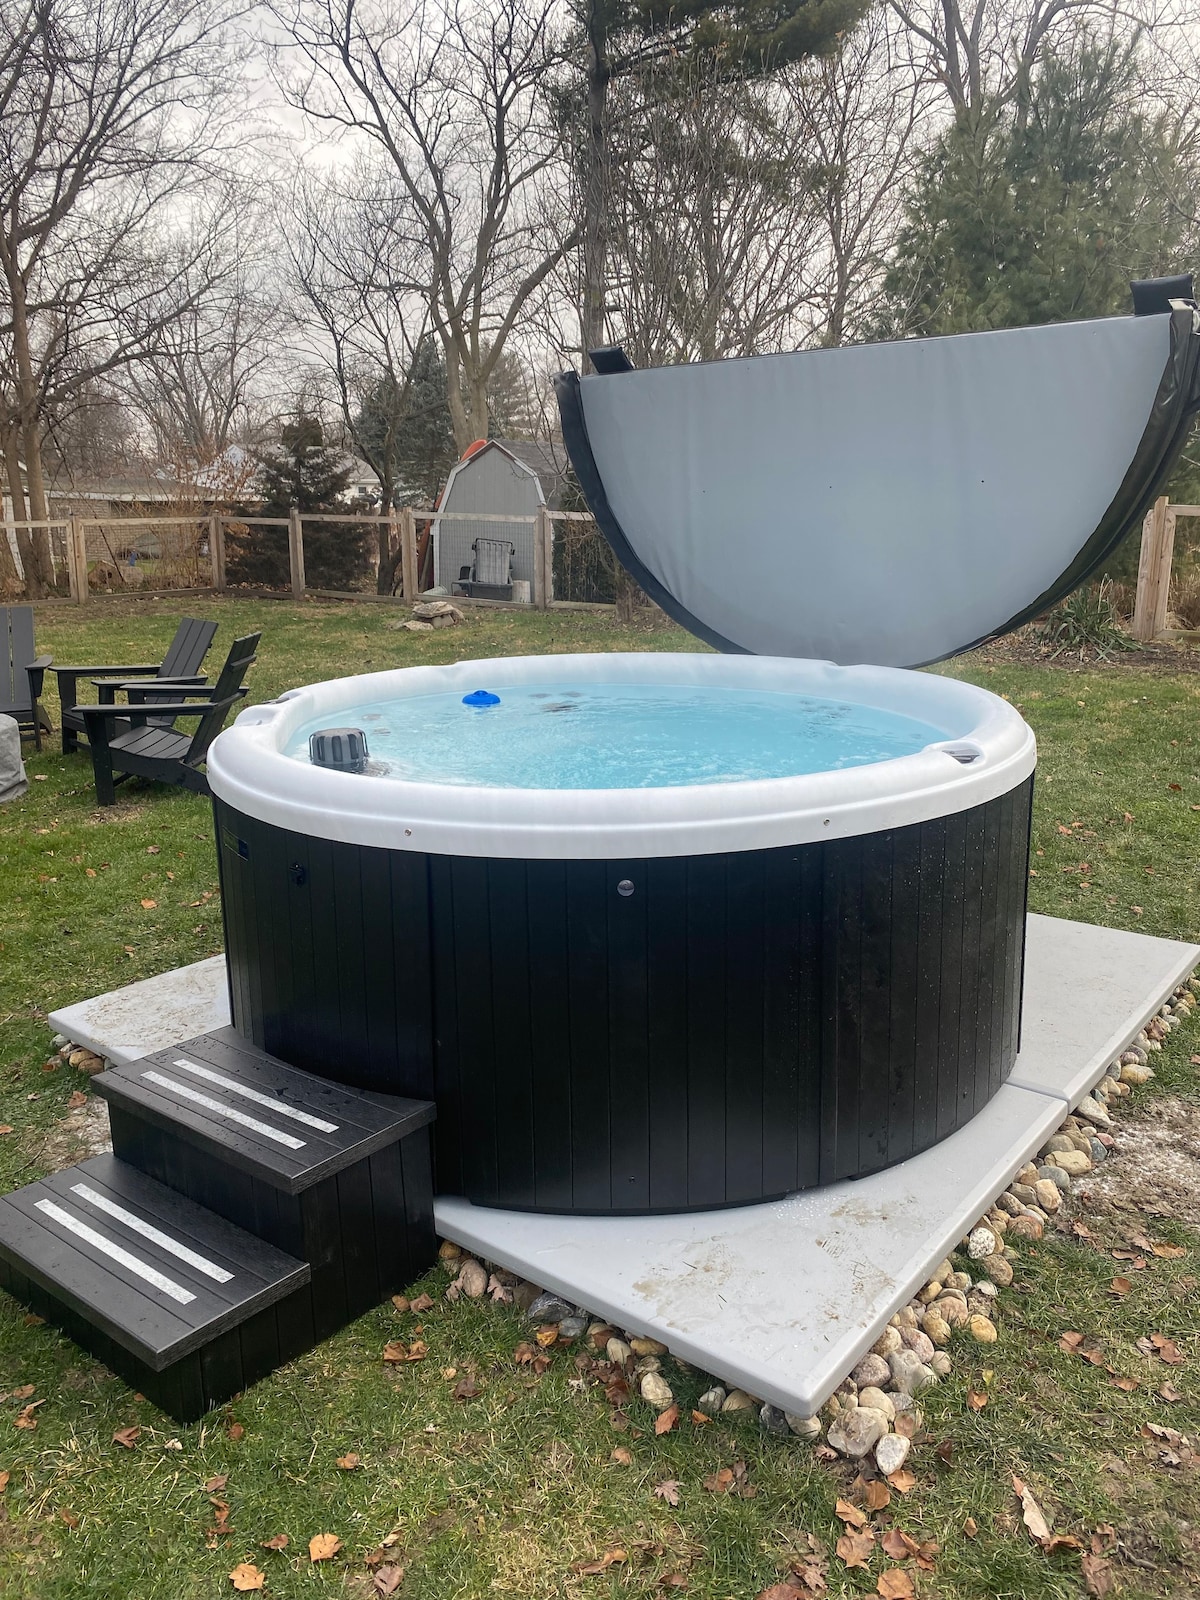 Pet friendly stylish retreat with sauna, hot tub